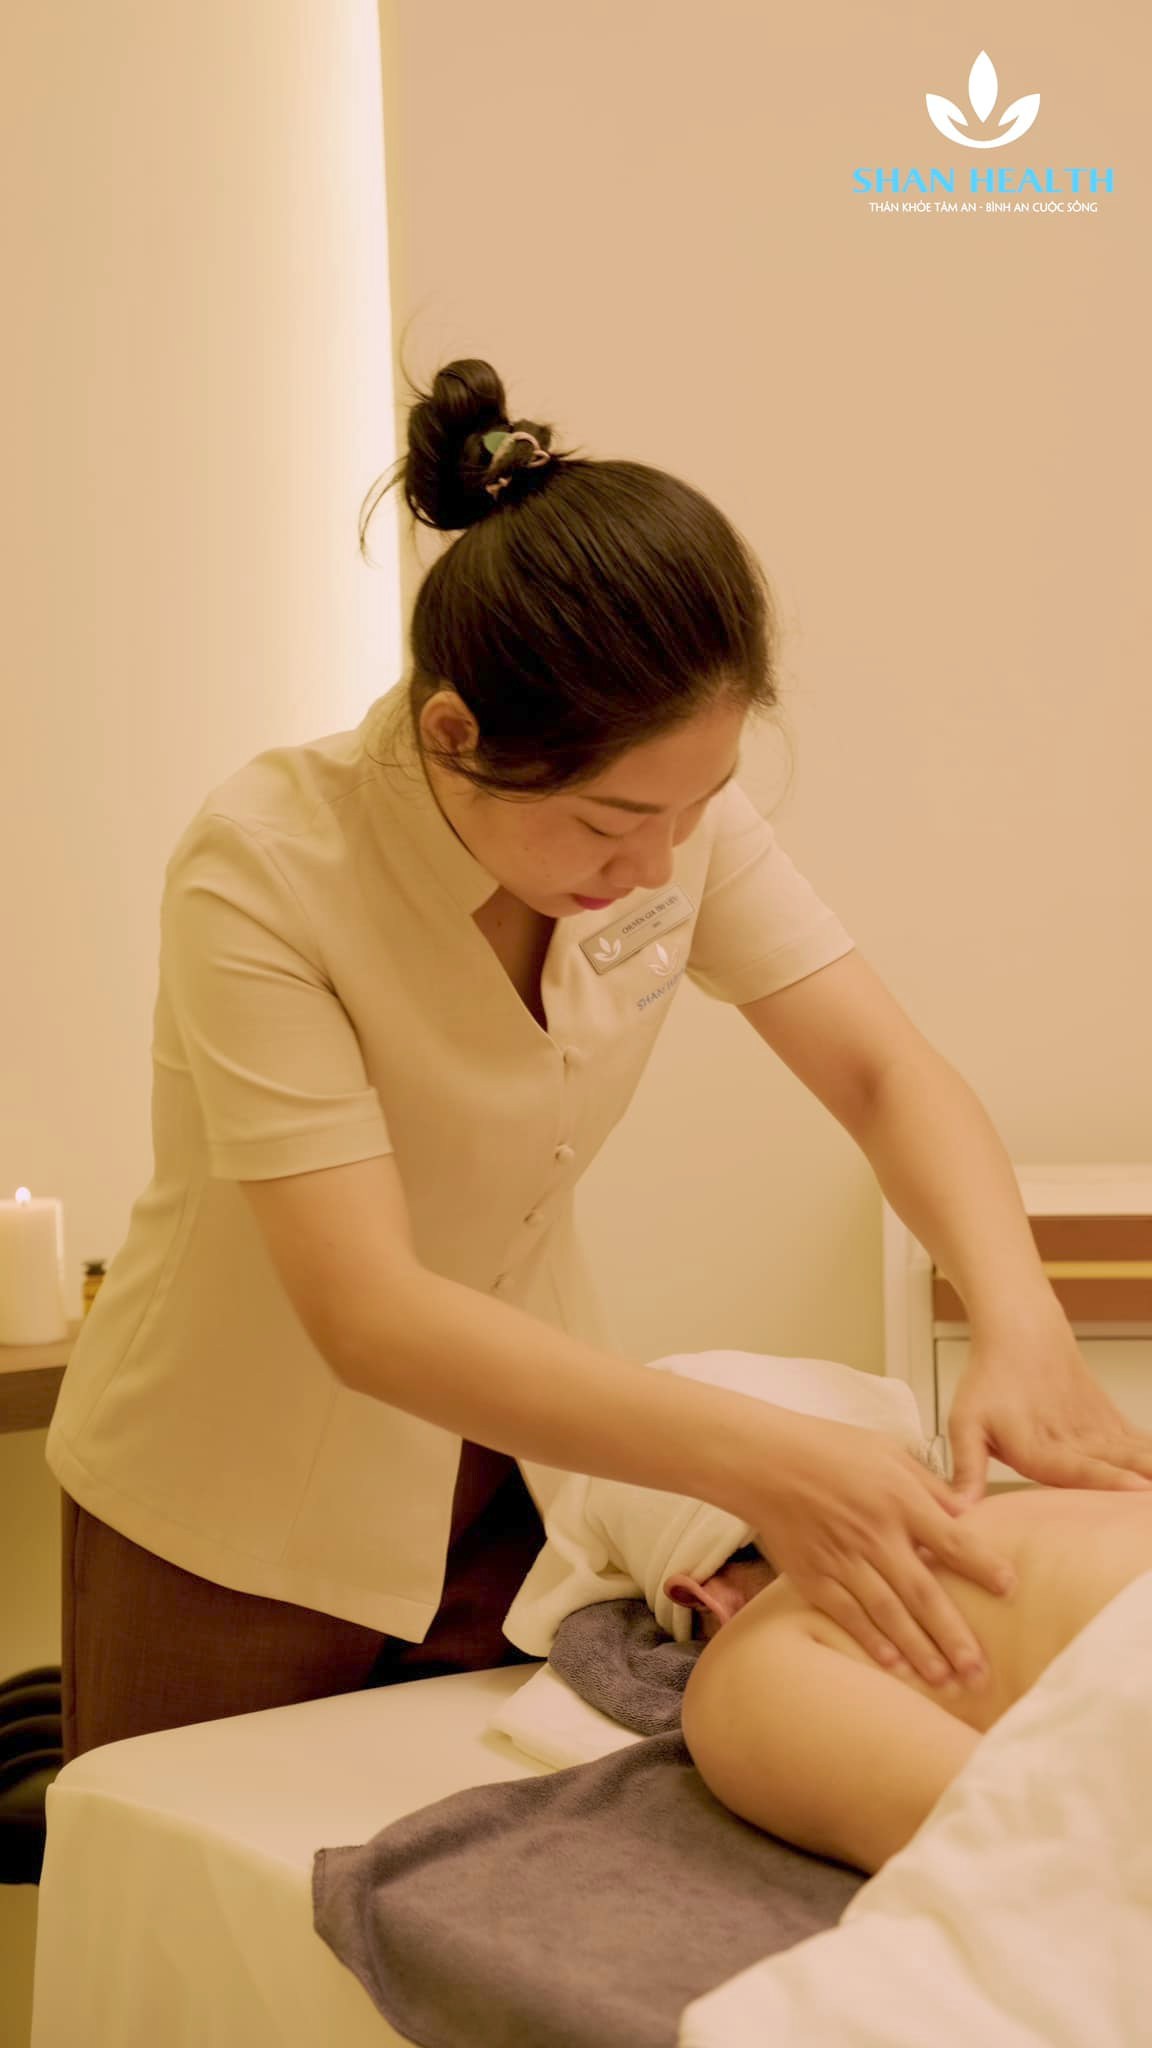 Địa chỉ massage trị liệu chuyên nghiệp, hiệu quả - Shan Health